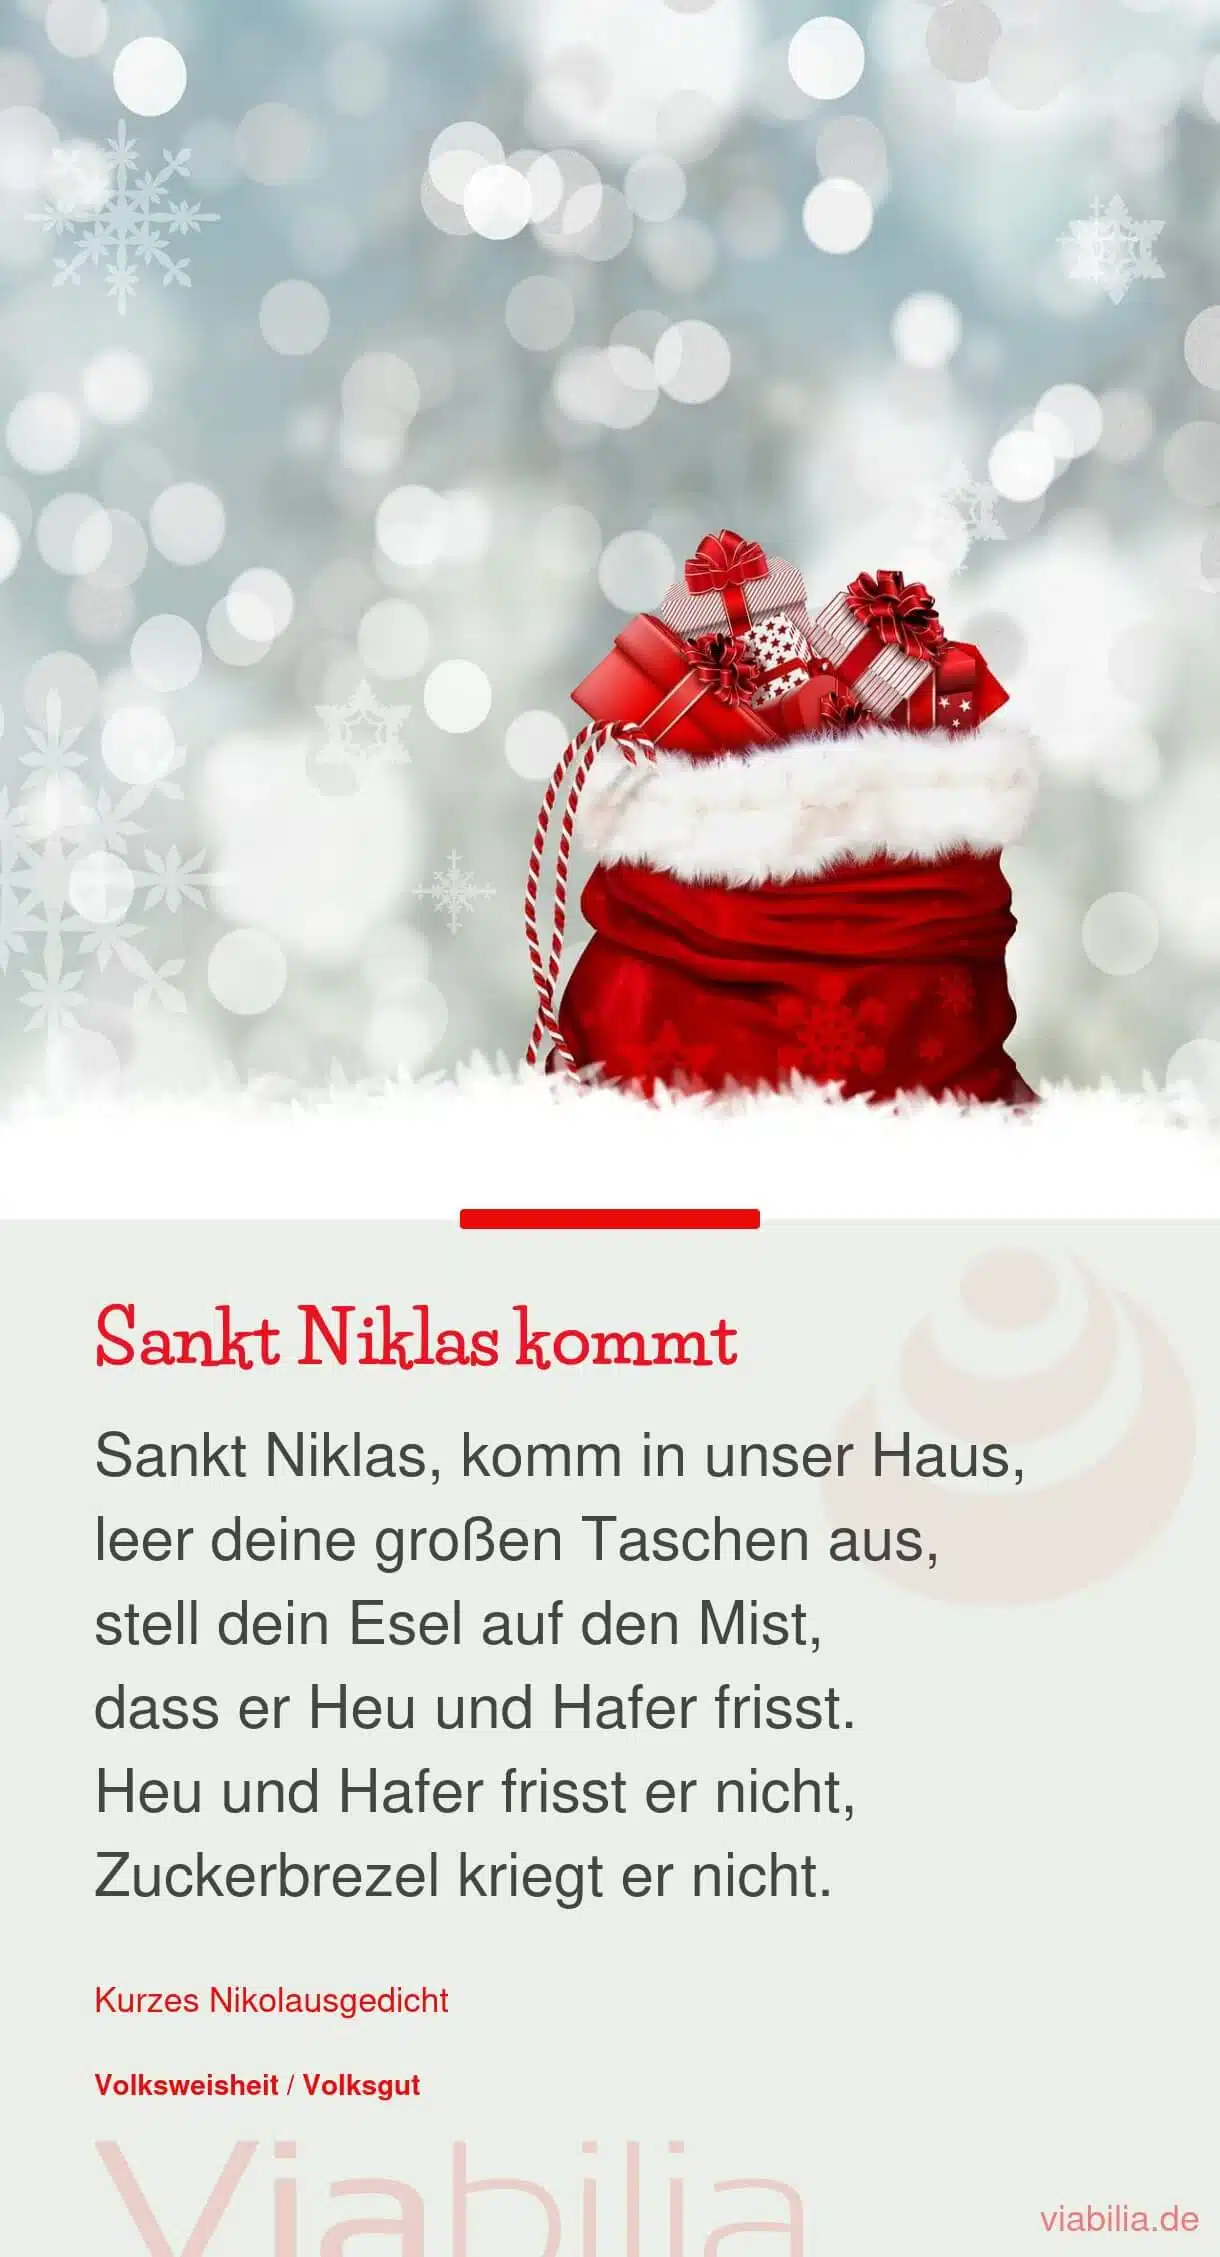 Adventsgedicht zum Nikolaustag: Sankt Niklas kommt